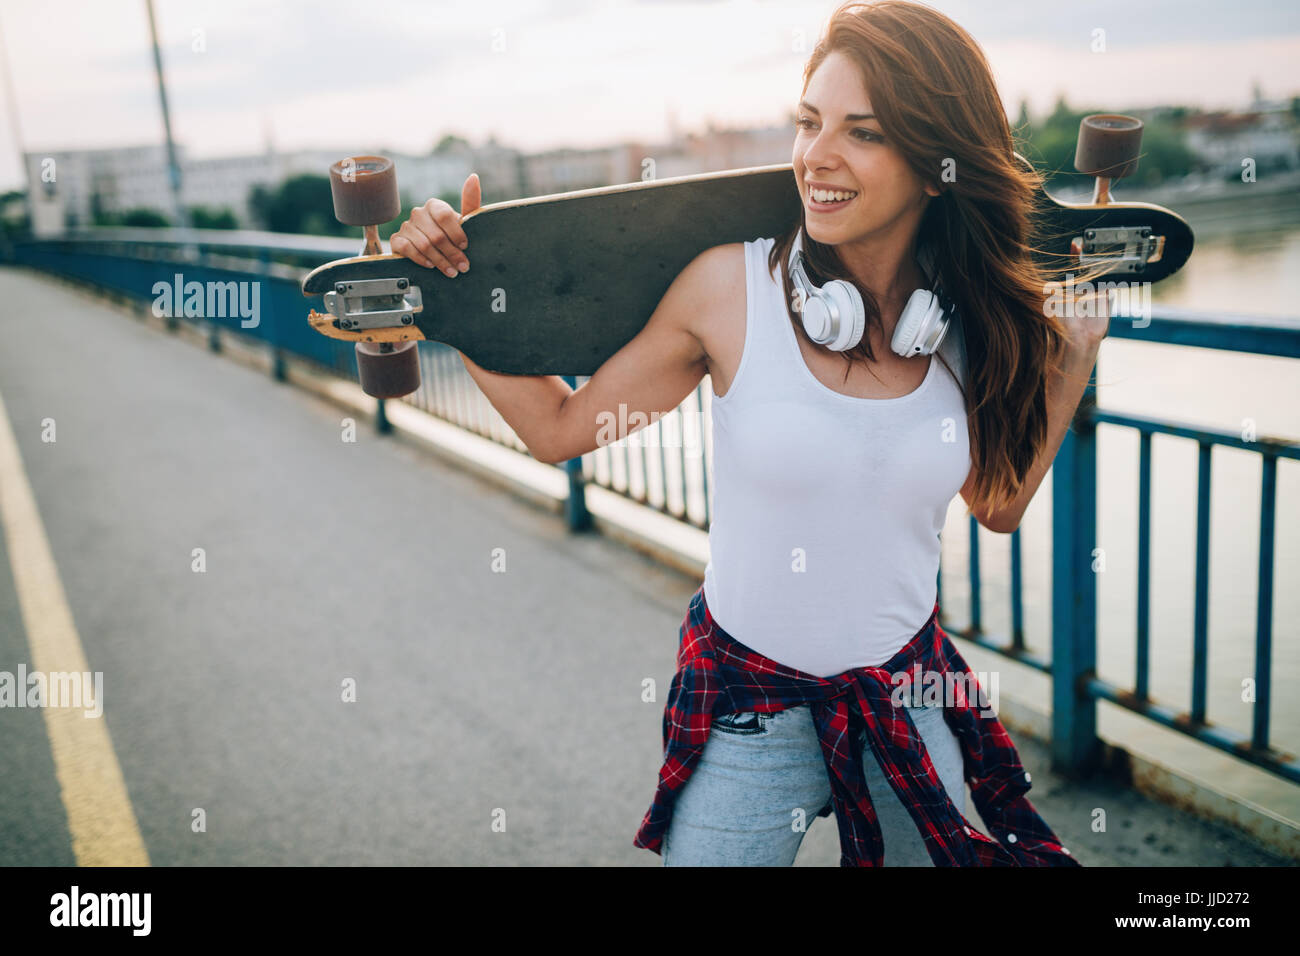 Portrait of beautiful smiling girl skateboard transport Banque D'Images